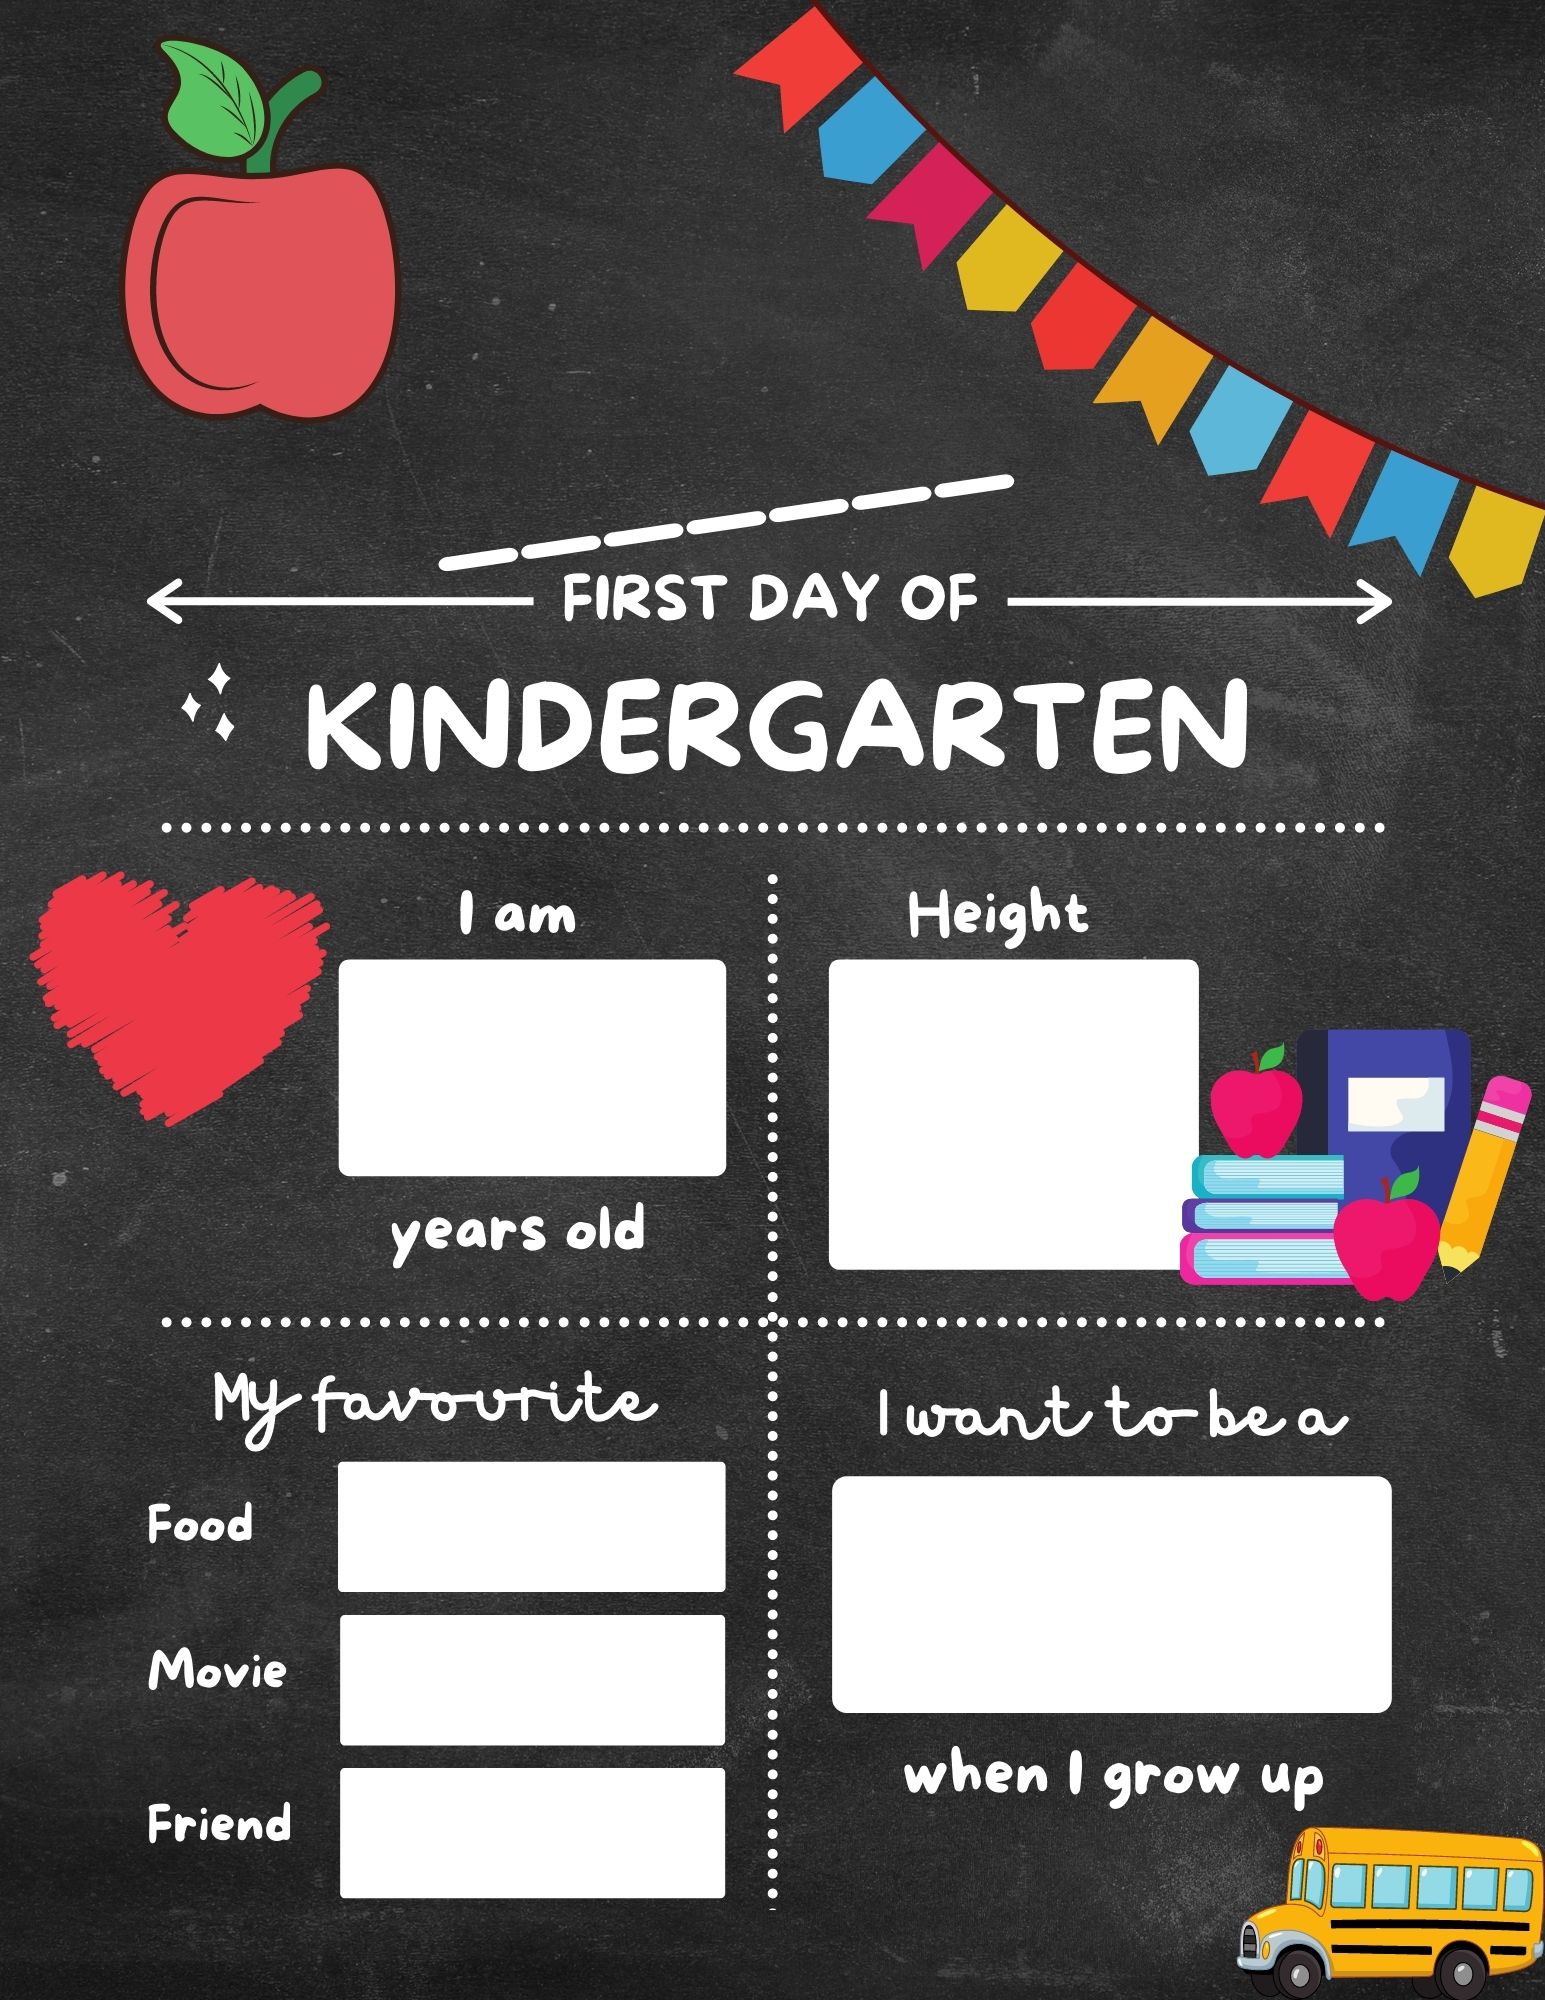 first day of kindergarten sign 2018 2019